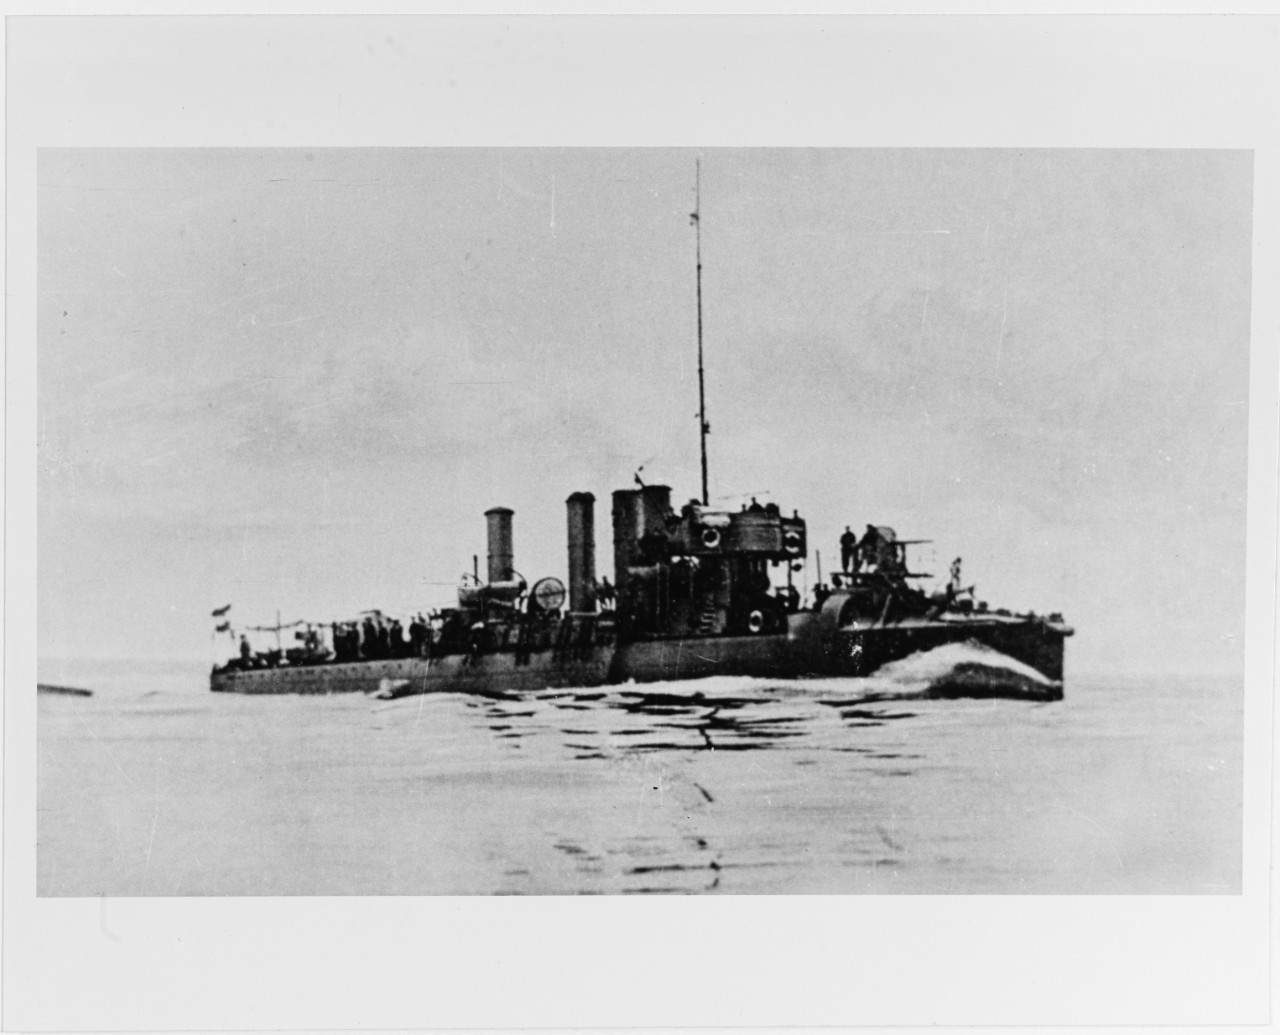 HUSZAR (Austrian Destroyer, 1905-1920)